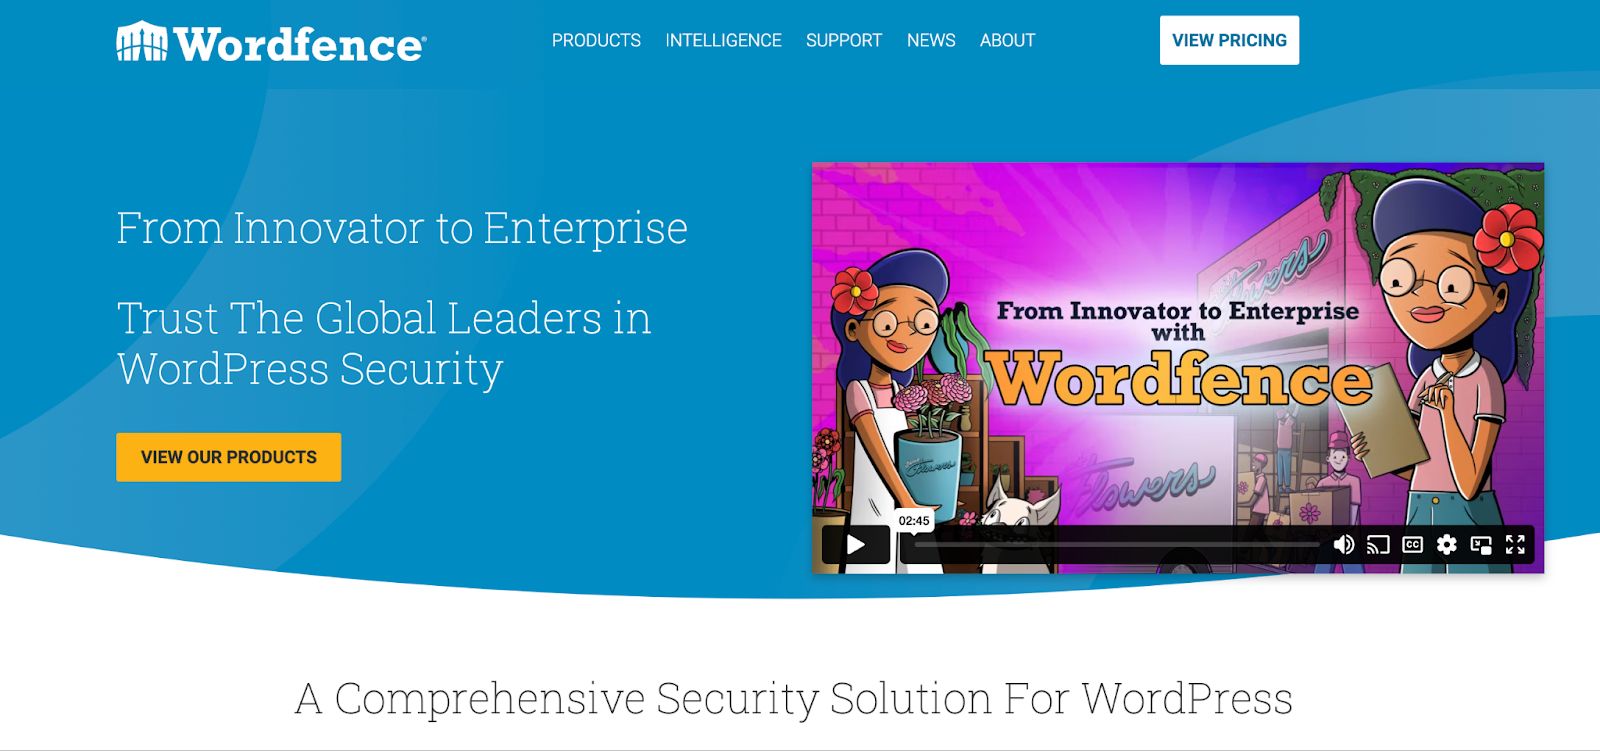 A screenshot of Wordfence’s website